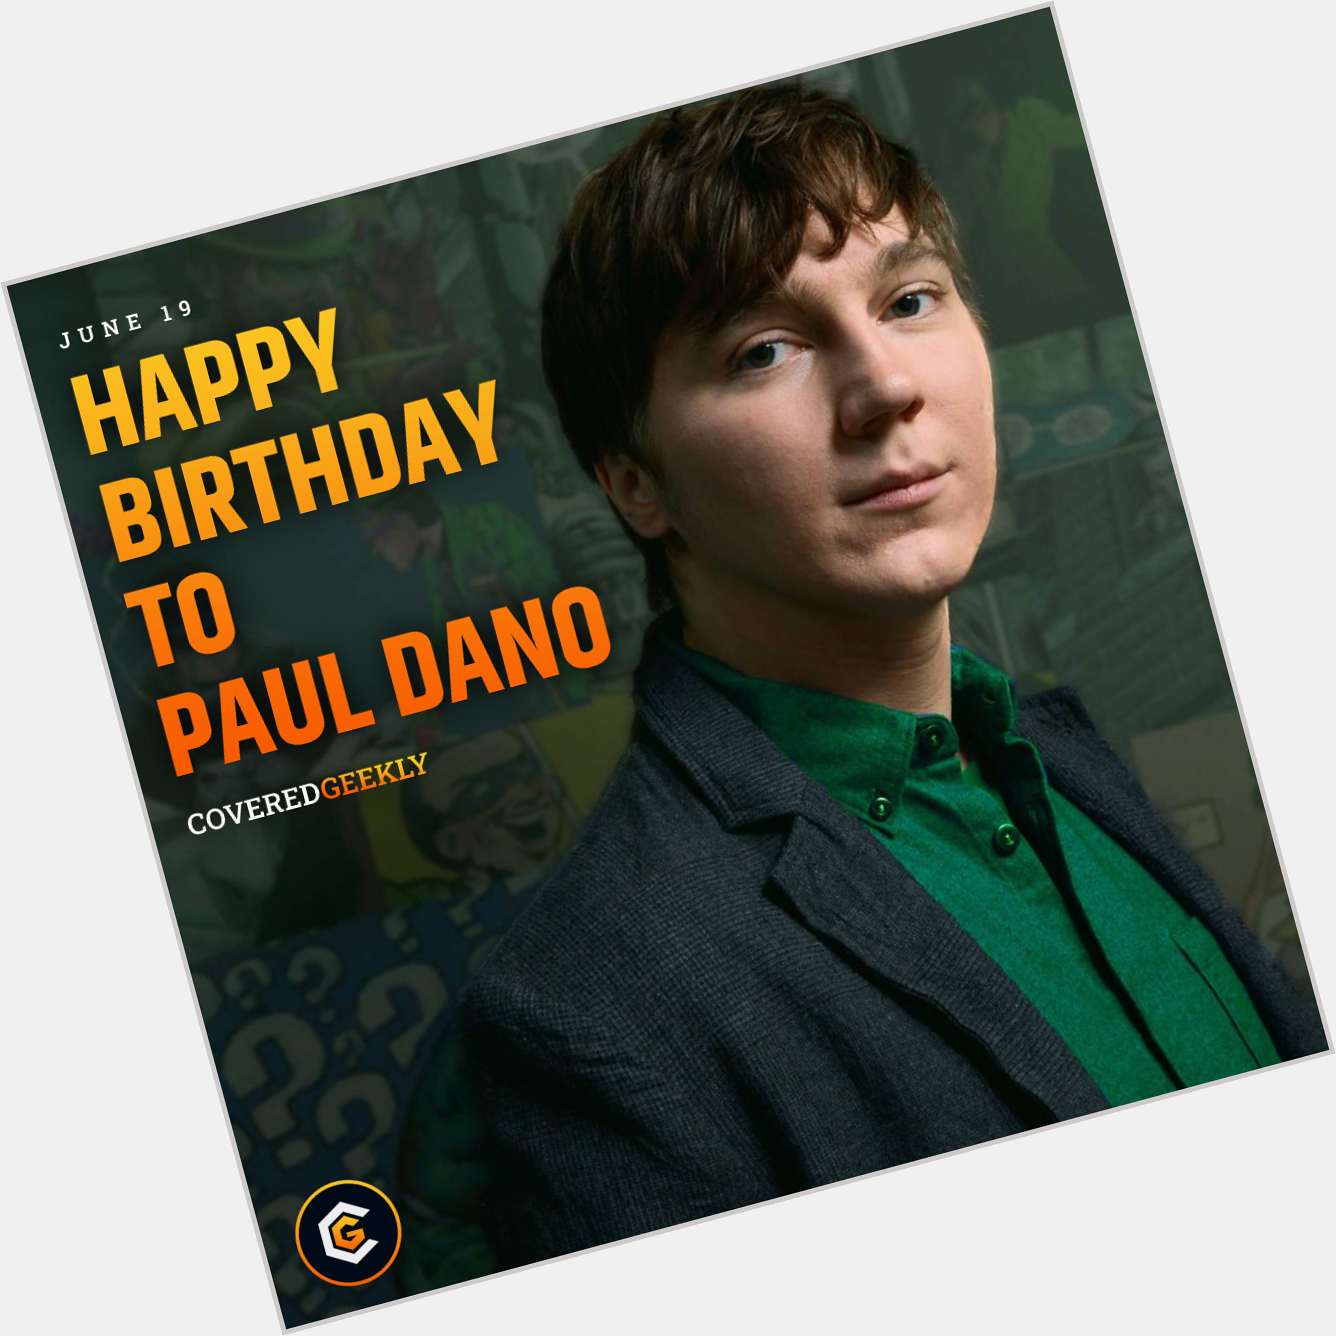 Paul Dano turns 39 years old today.

Happy Birthday! 